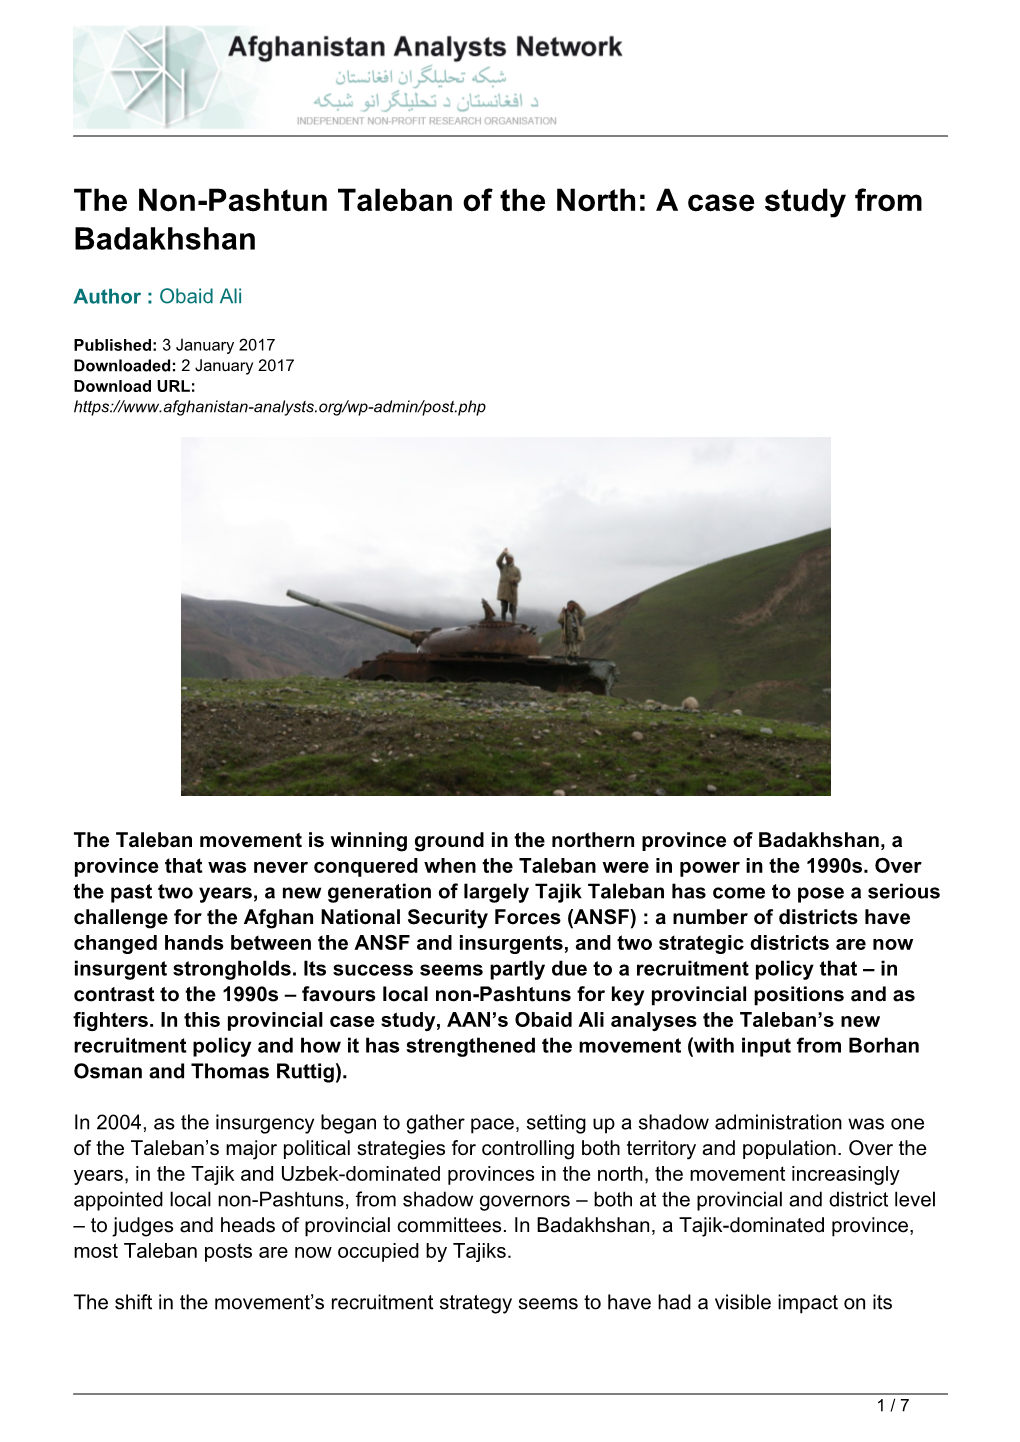 The Non-Pashtun Taleban of the North: a Case Study from Badakhshan